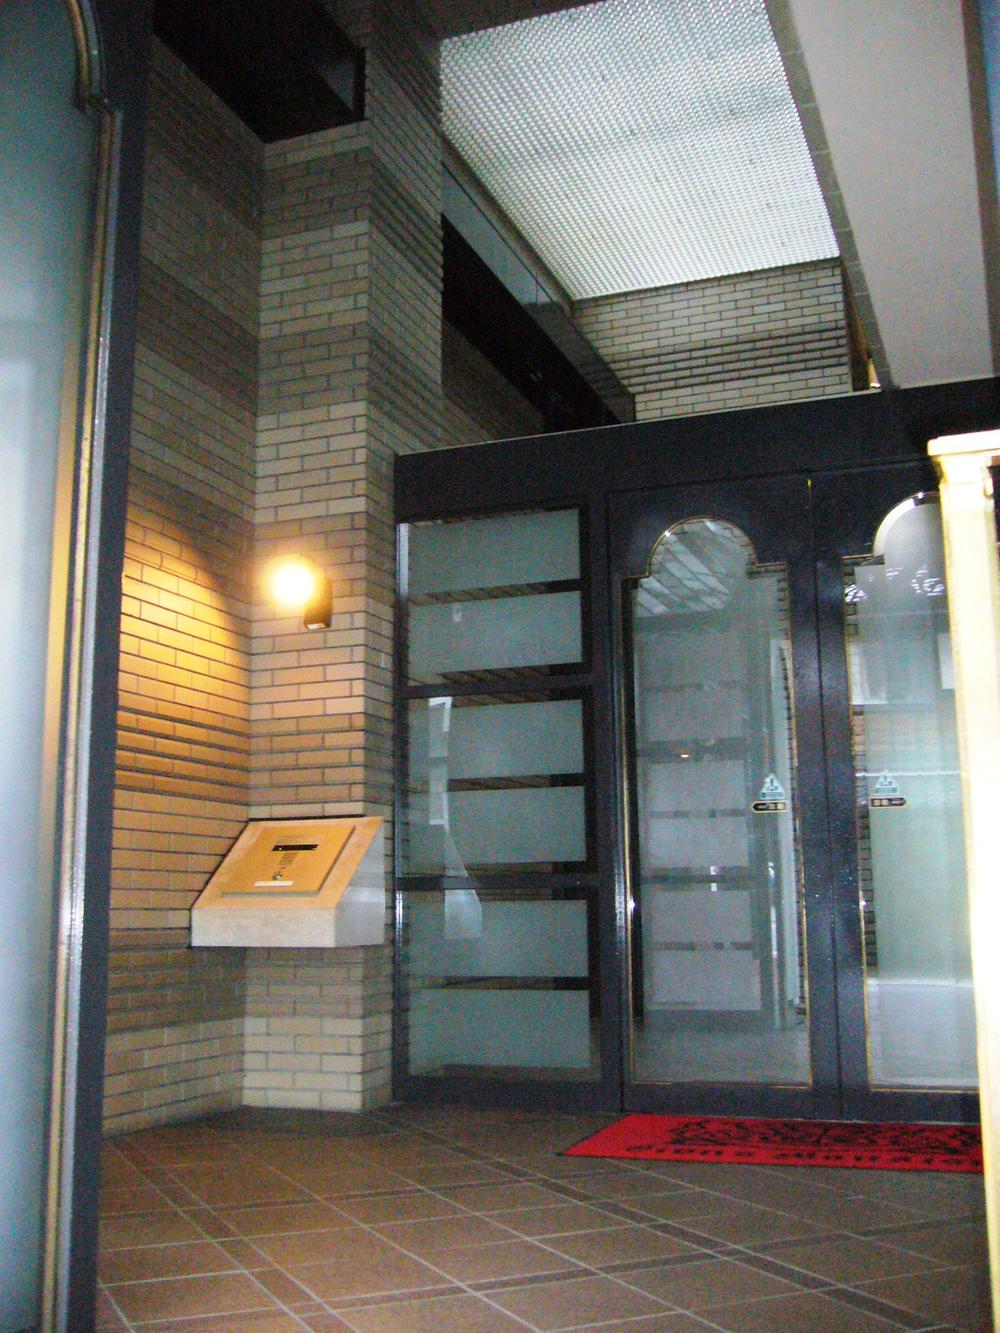 Entrance. Entrance Hall (July 2013 shooting)